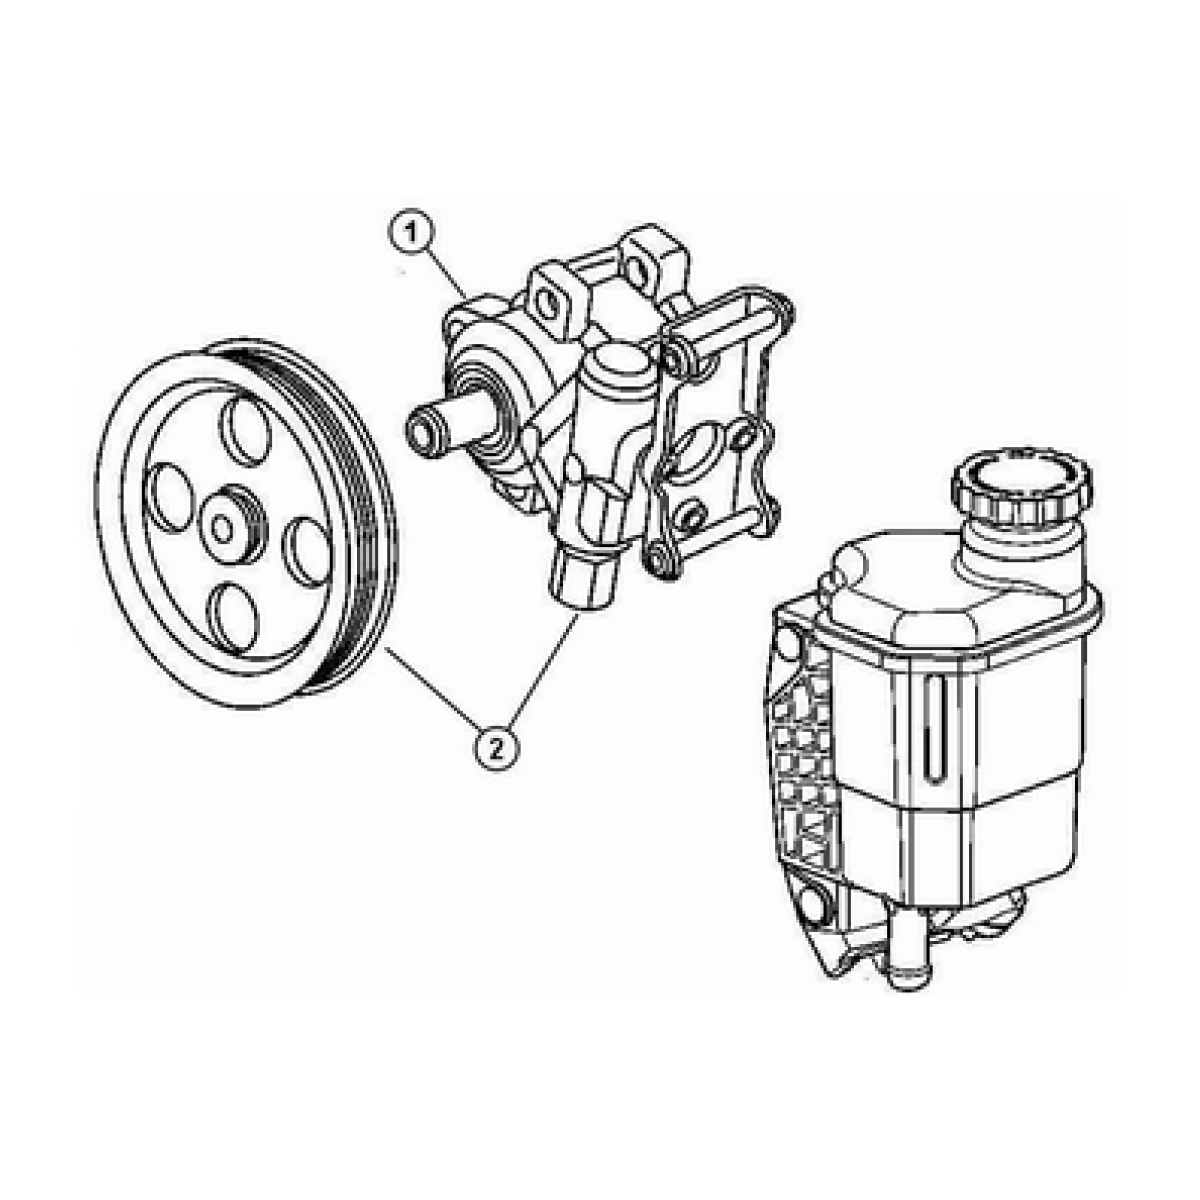 2013 to 2018 Dodge Ram Power Steering Pump Upgrade Kit 